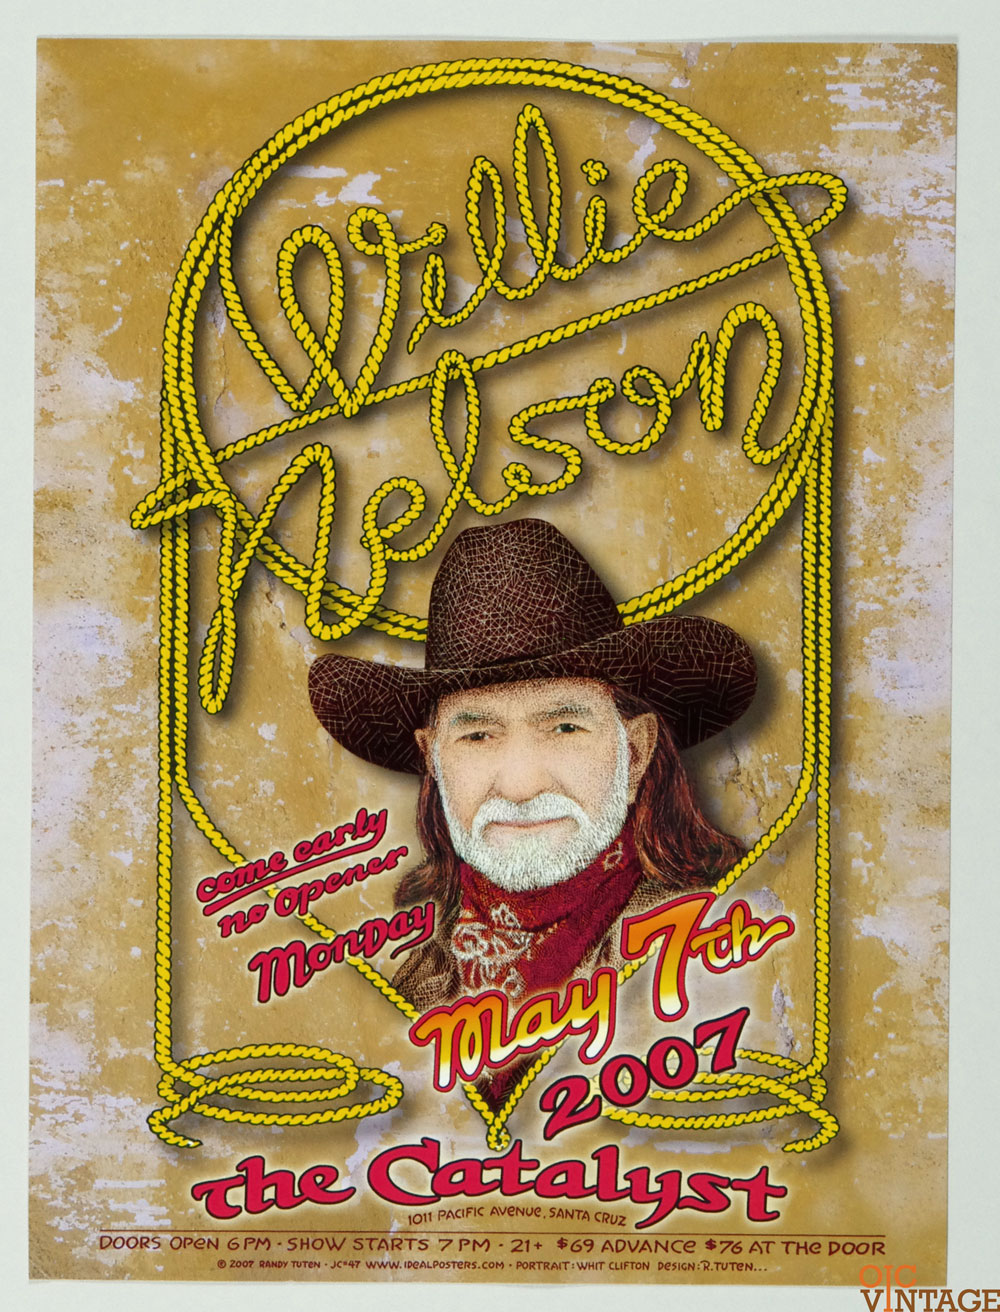 Willie Nelson Poster 2007 May 7 The Catalyst Santa Cruz Randy Tuten